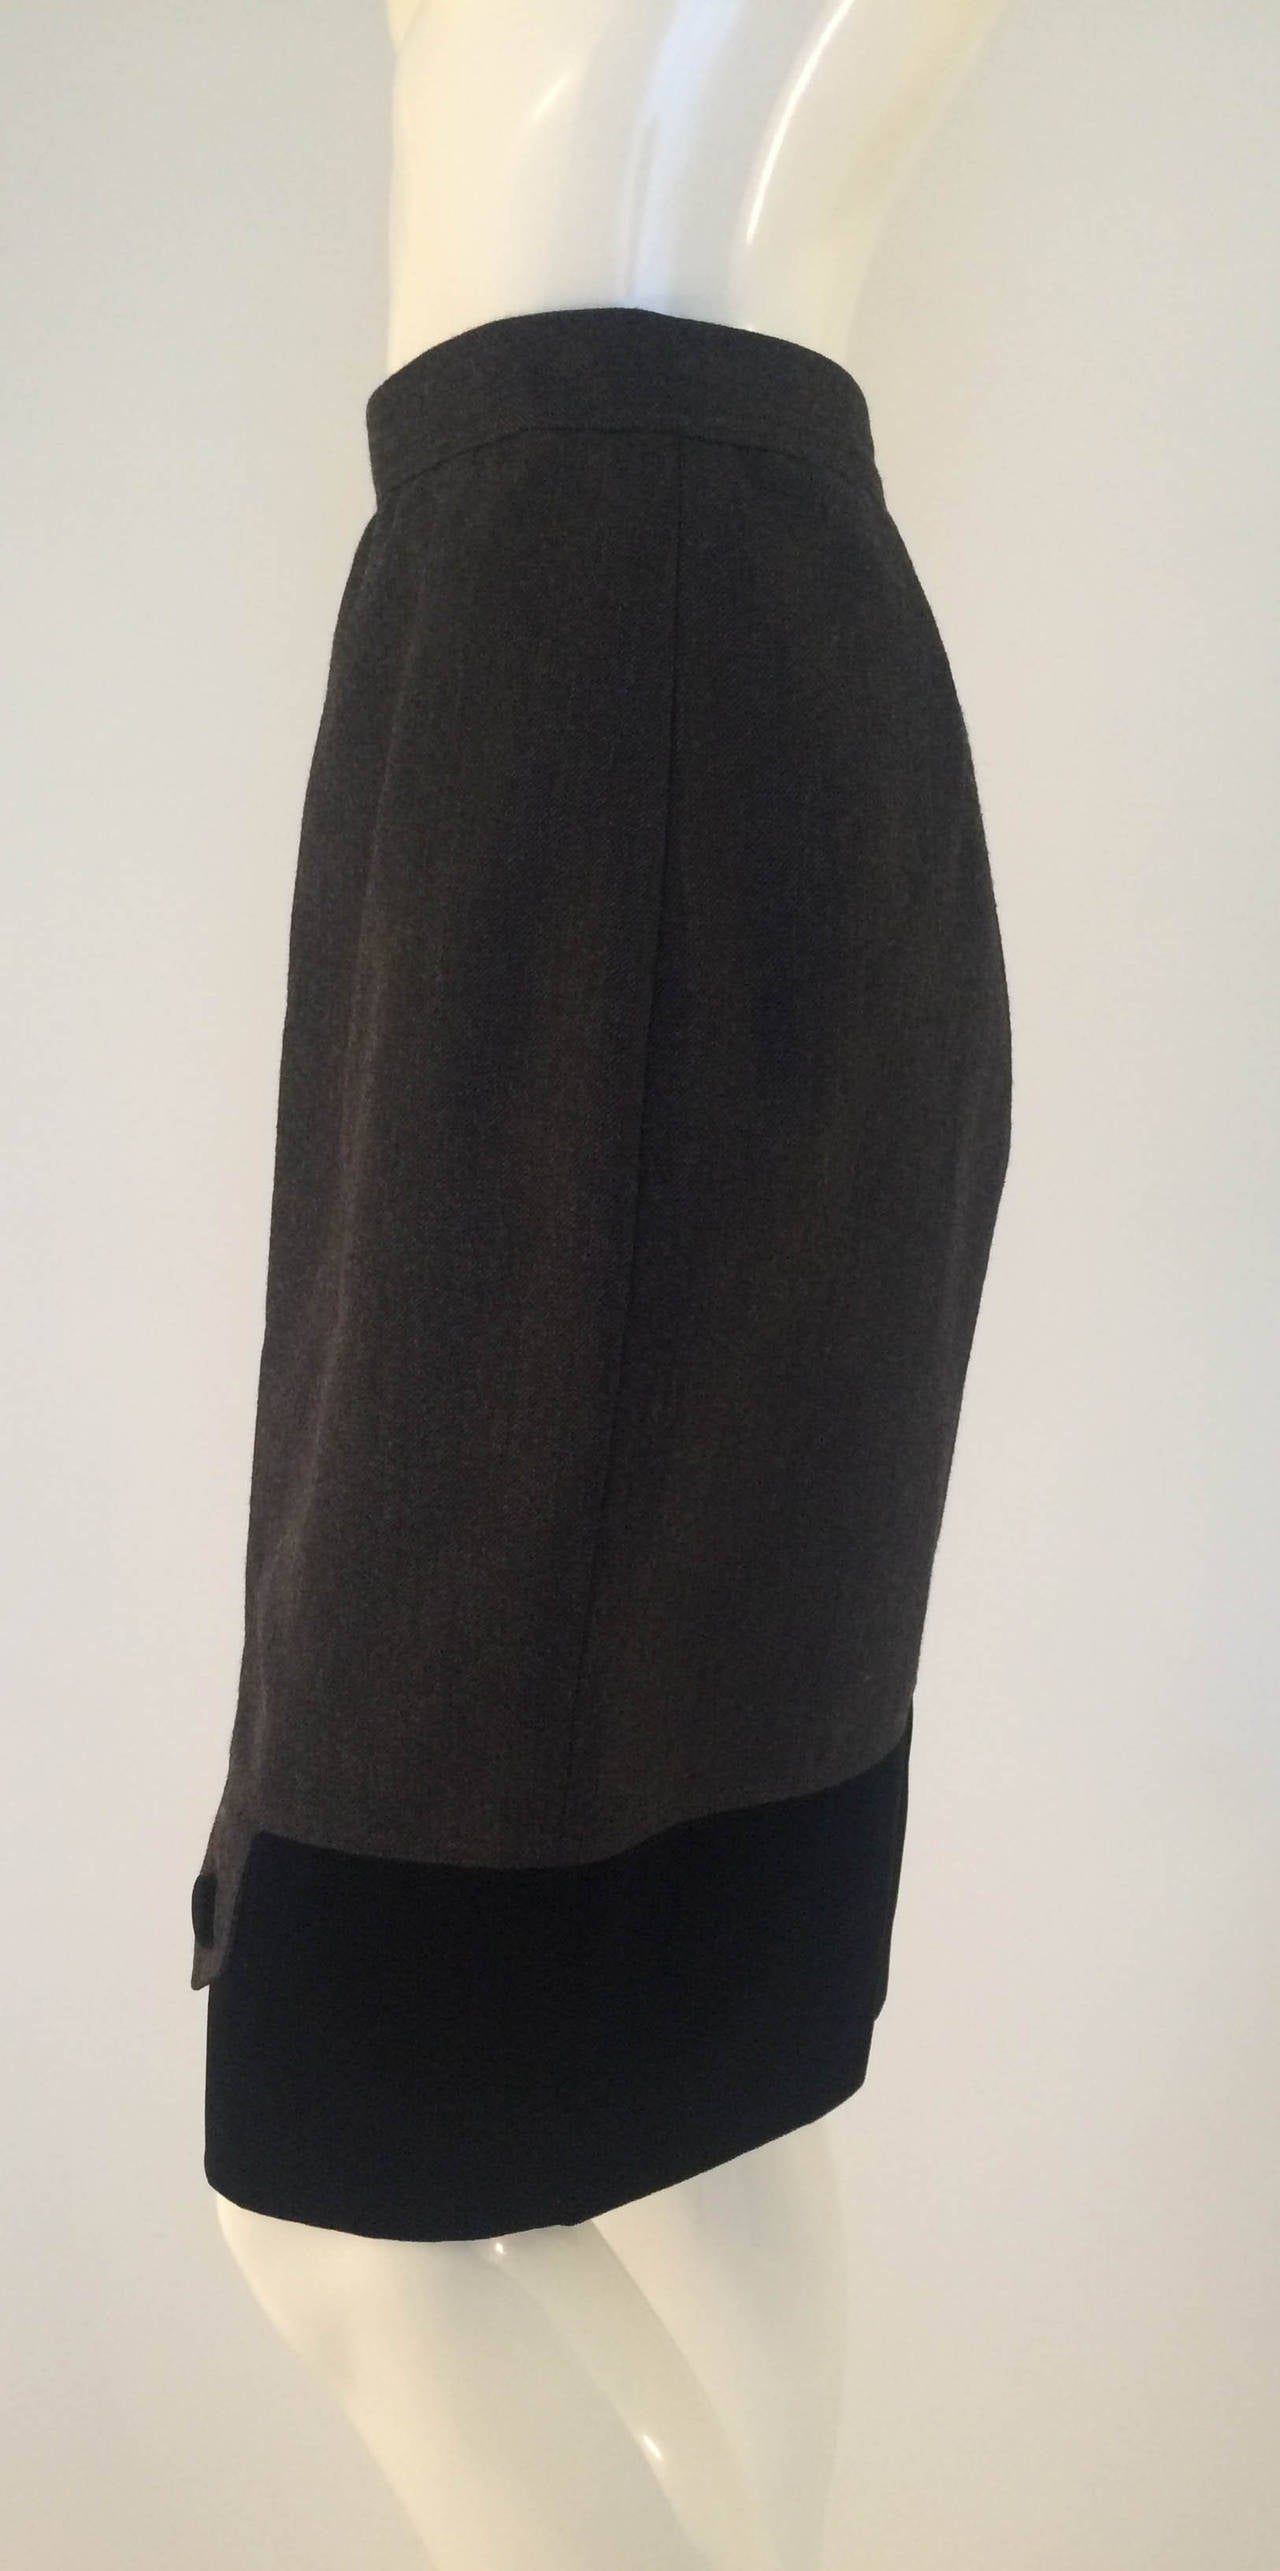 Stylish Valentino Miss V Pencil Skirt. Grey wool skirt with a really smart black velvet hem. Iconic 1980s cut. 

MATERIAL: Wool (Velvet hem)

SIZE: 40 (Italy), 6 (US)

Measurements (approx):
Waist: 68cm/
Hips: 94cm
Hem: 88cm
Length: 60cm